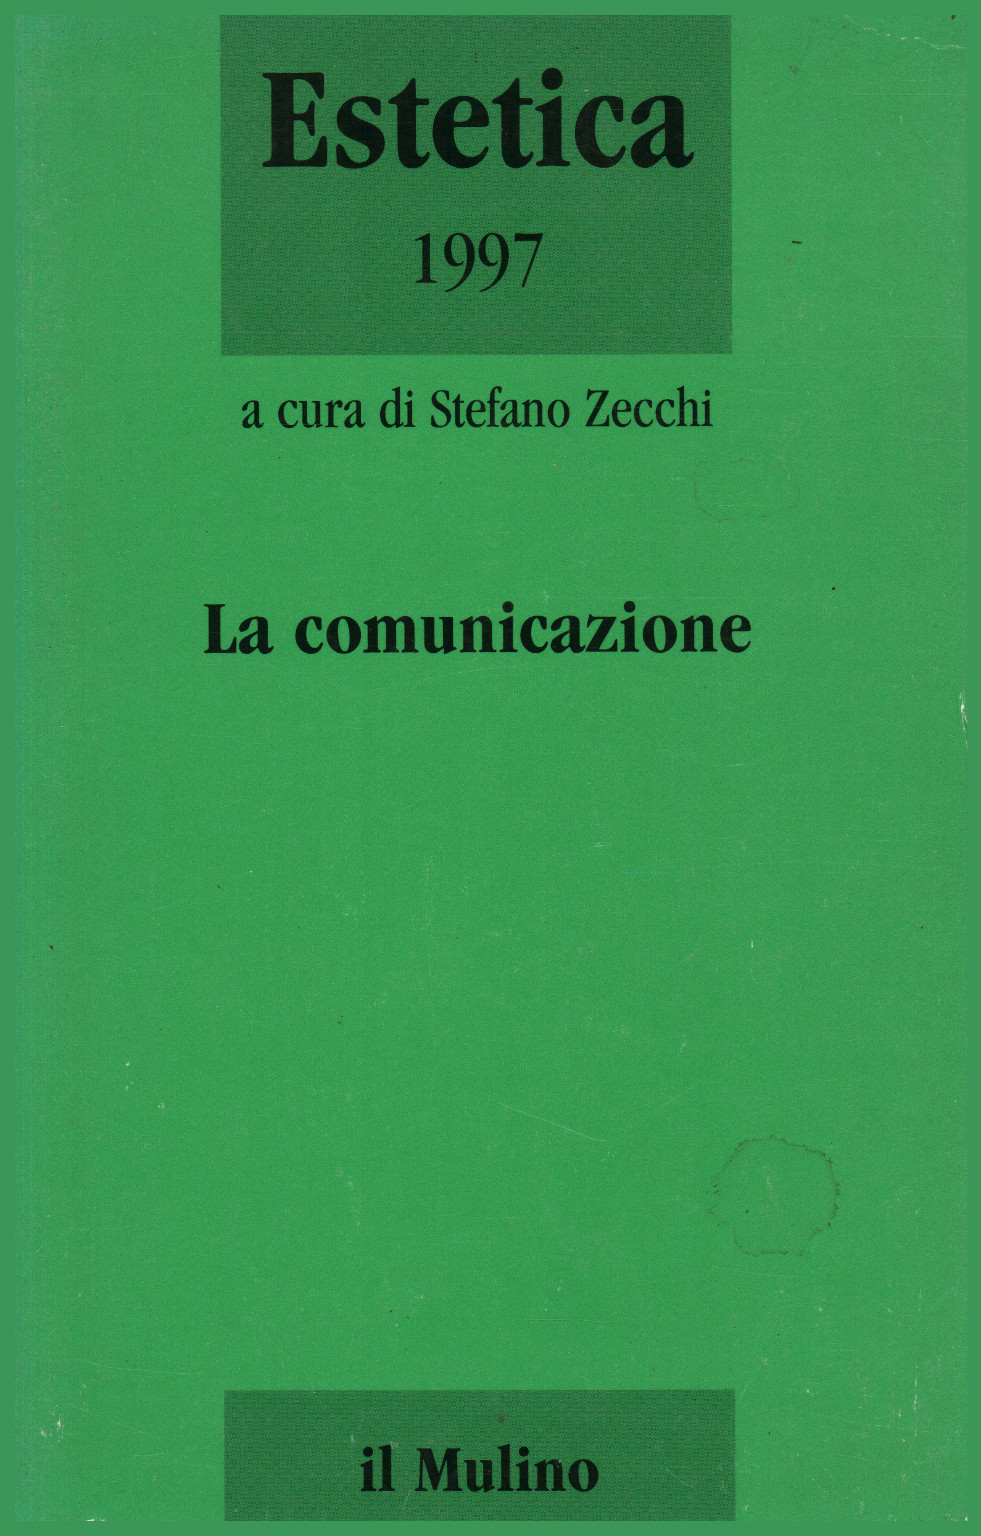 Aesthetics 1997. Communication, s.a.